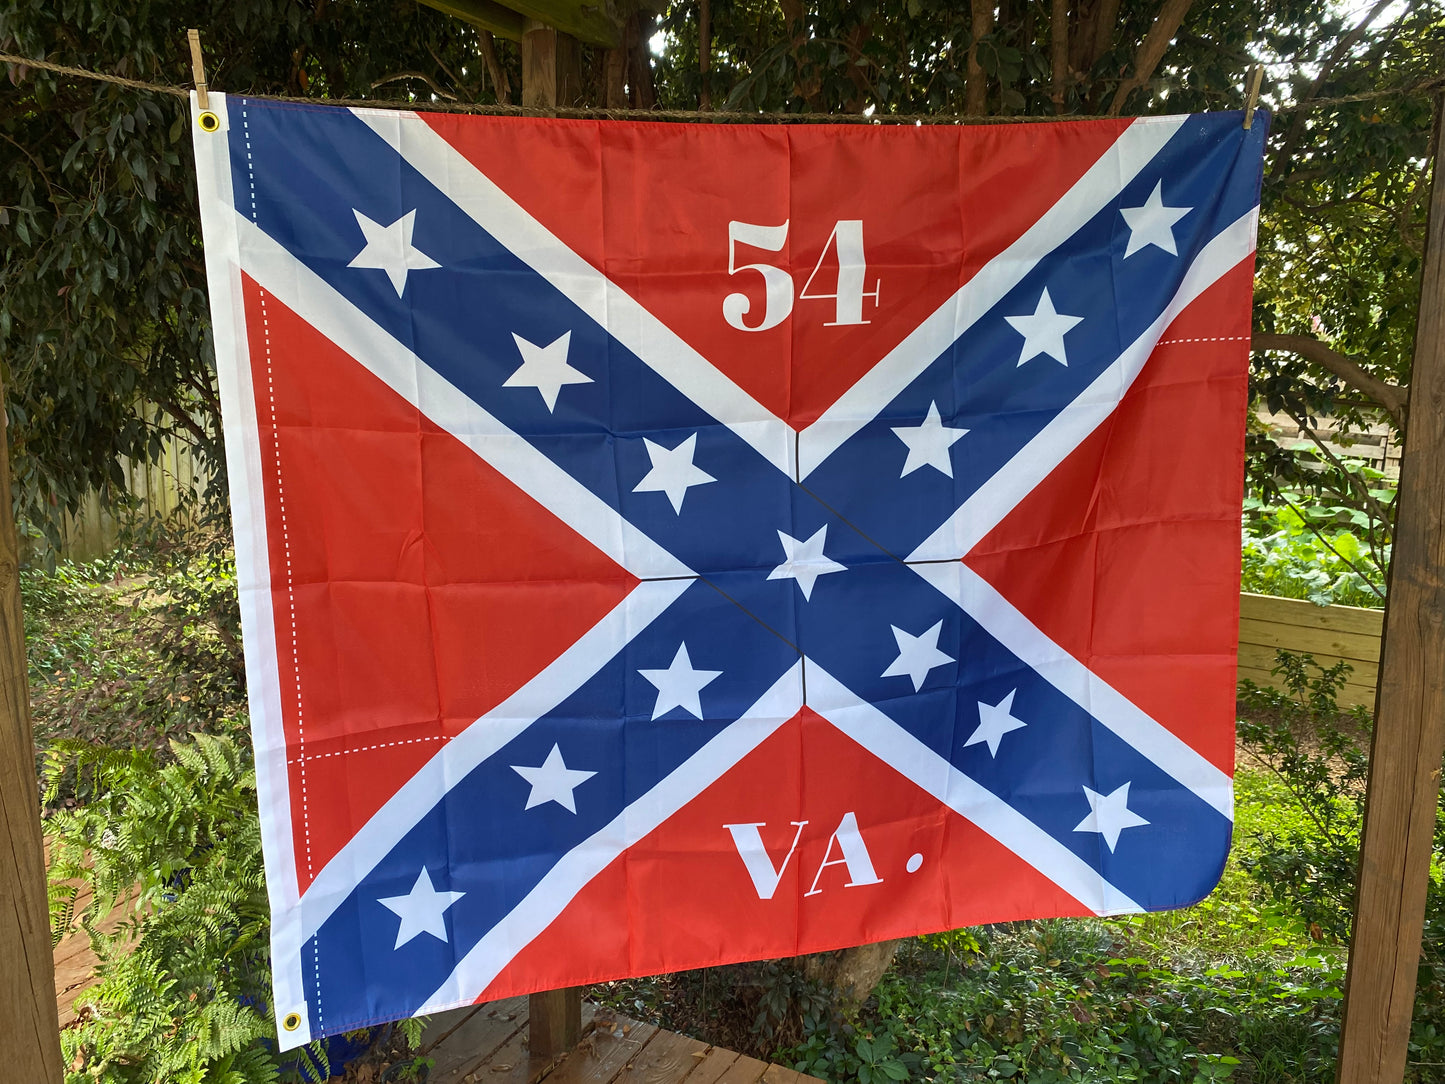 54th Virginia Infantry House Flag